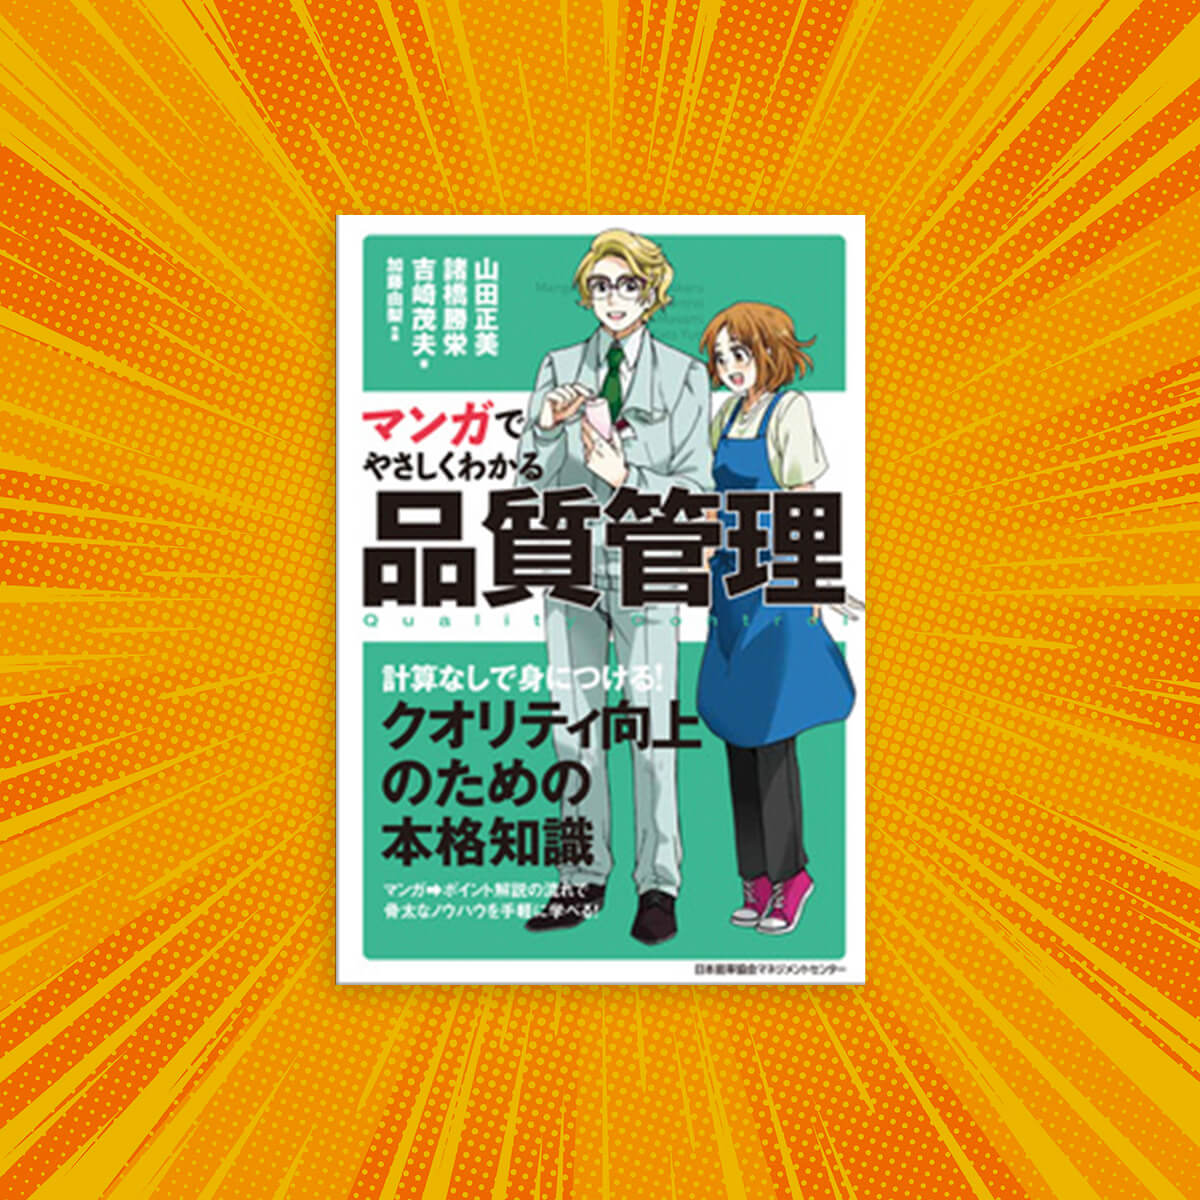 Easy reading through Manga | Quality control